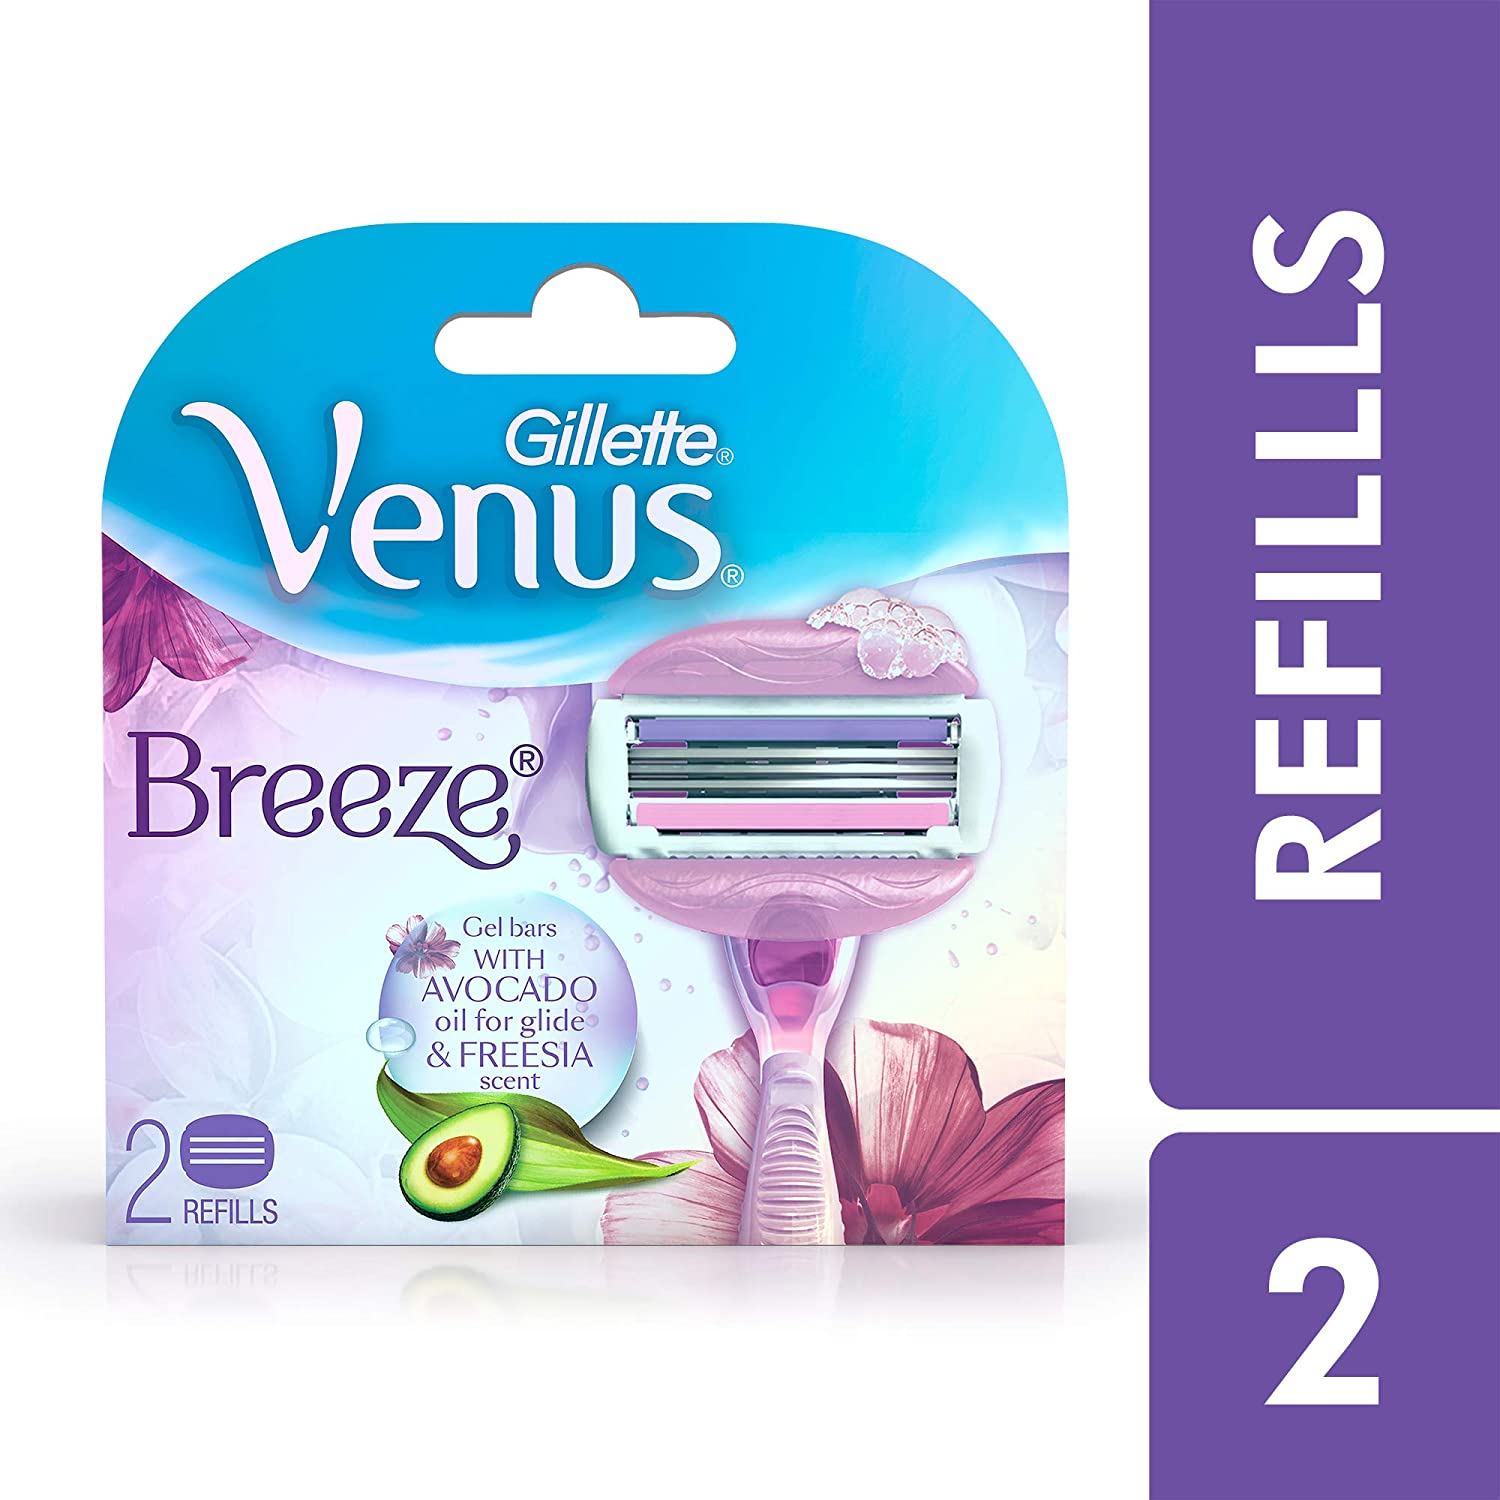 Gillette Venus Breeze Cartridge, 2 Count, Pack of 1 